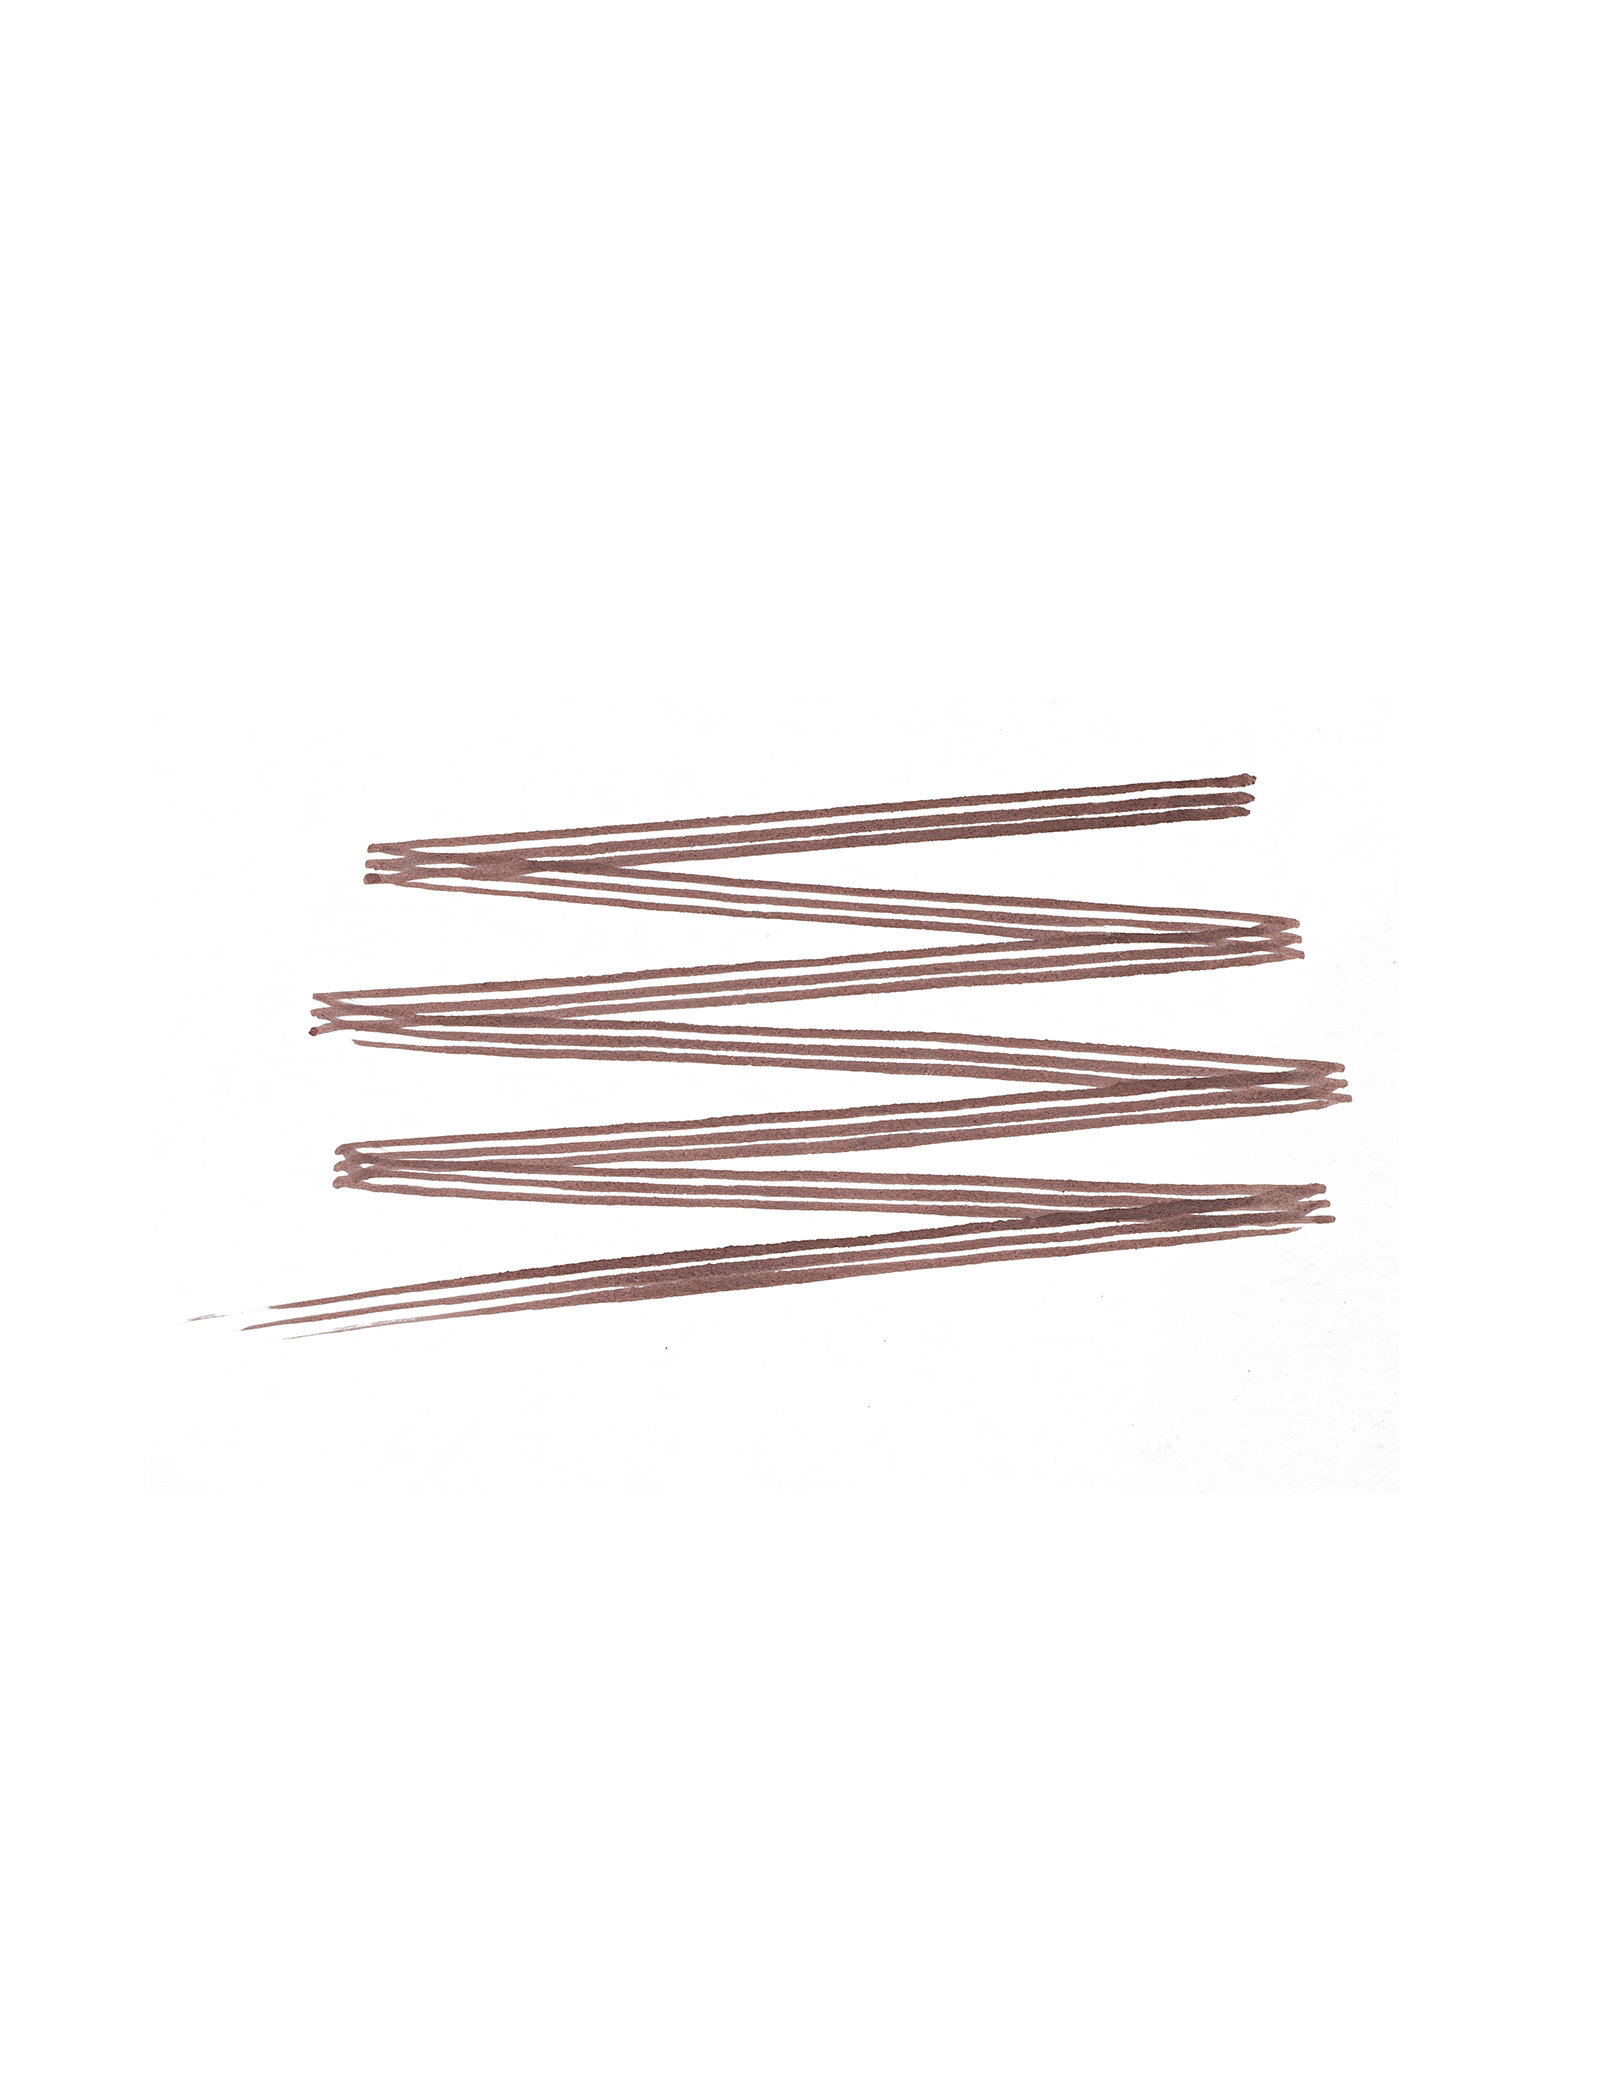 New Micro Brow Filler Pencil - Medium Brown 02 from Flormar